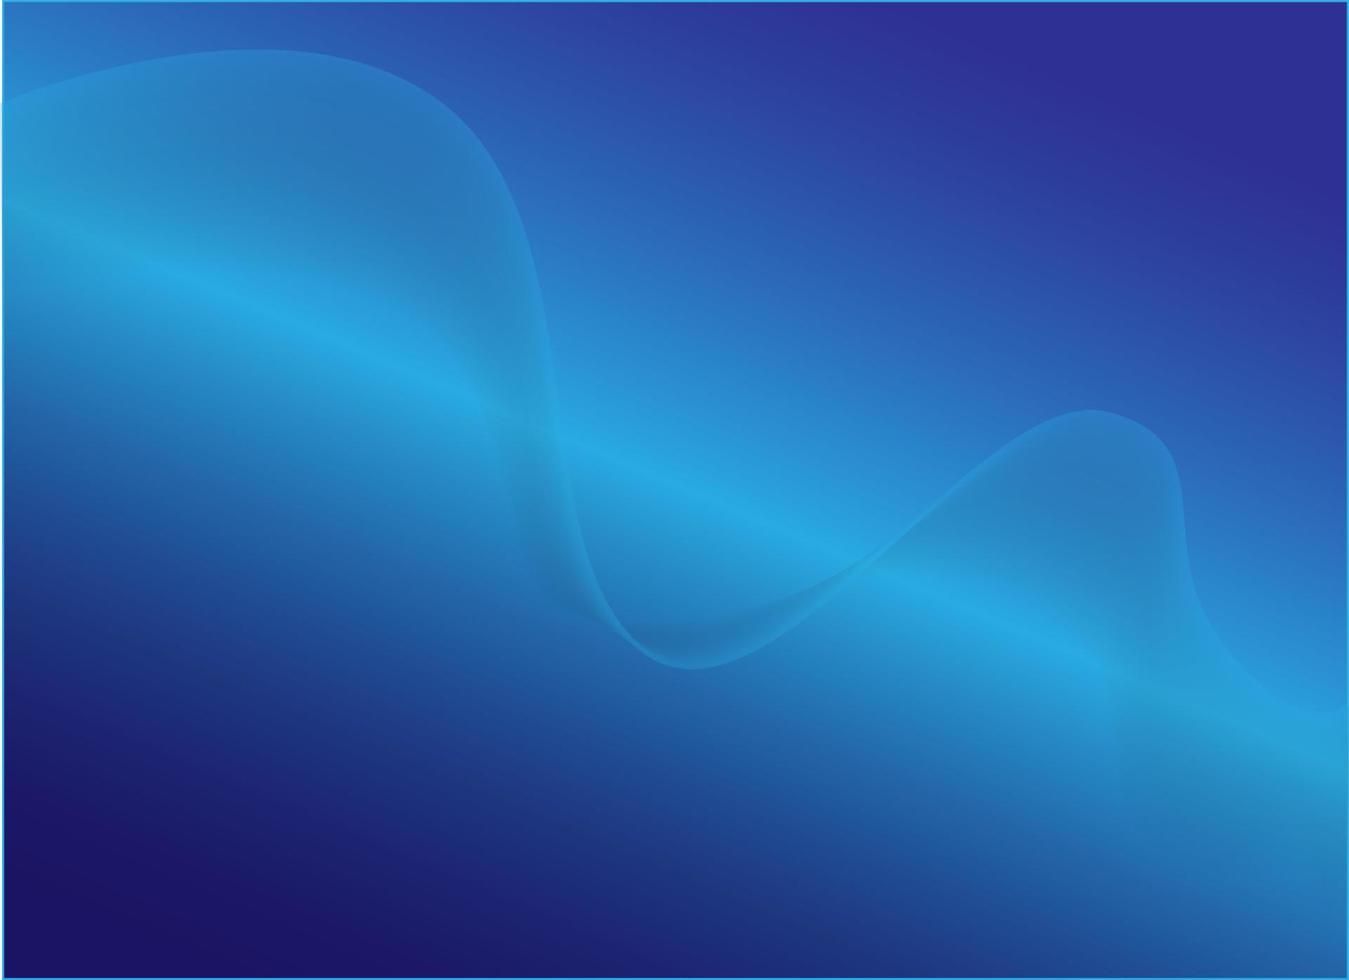 Fondo abstracto azul con efecto de onda de arte de línea degradada. Gráficos futuristas con concepto de tecnología de ondas de sonido. diseño digital con tapa monocromática. plantillas modernas vector